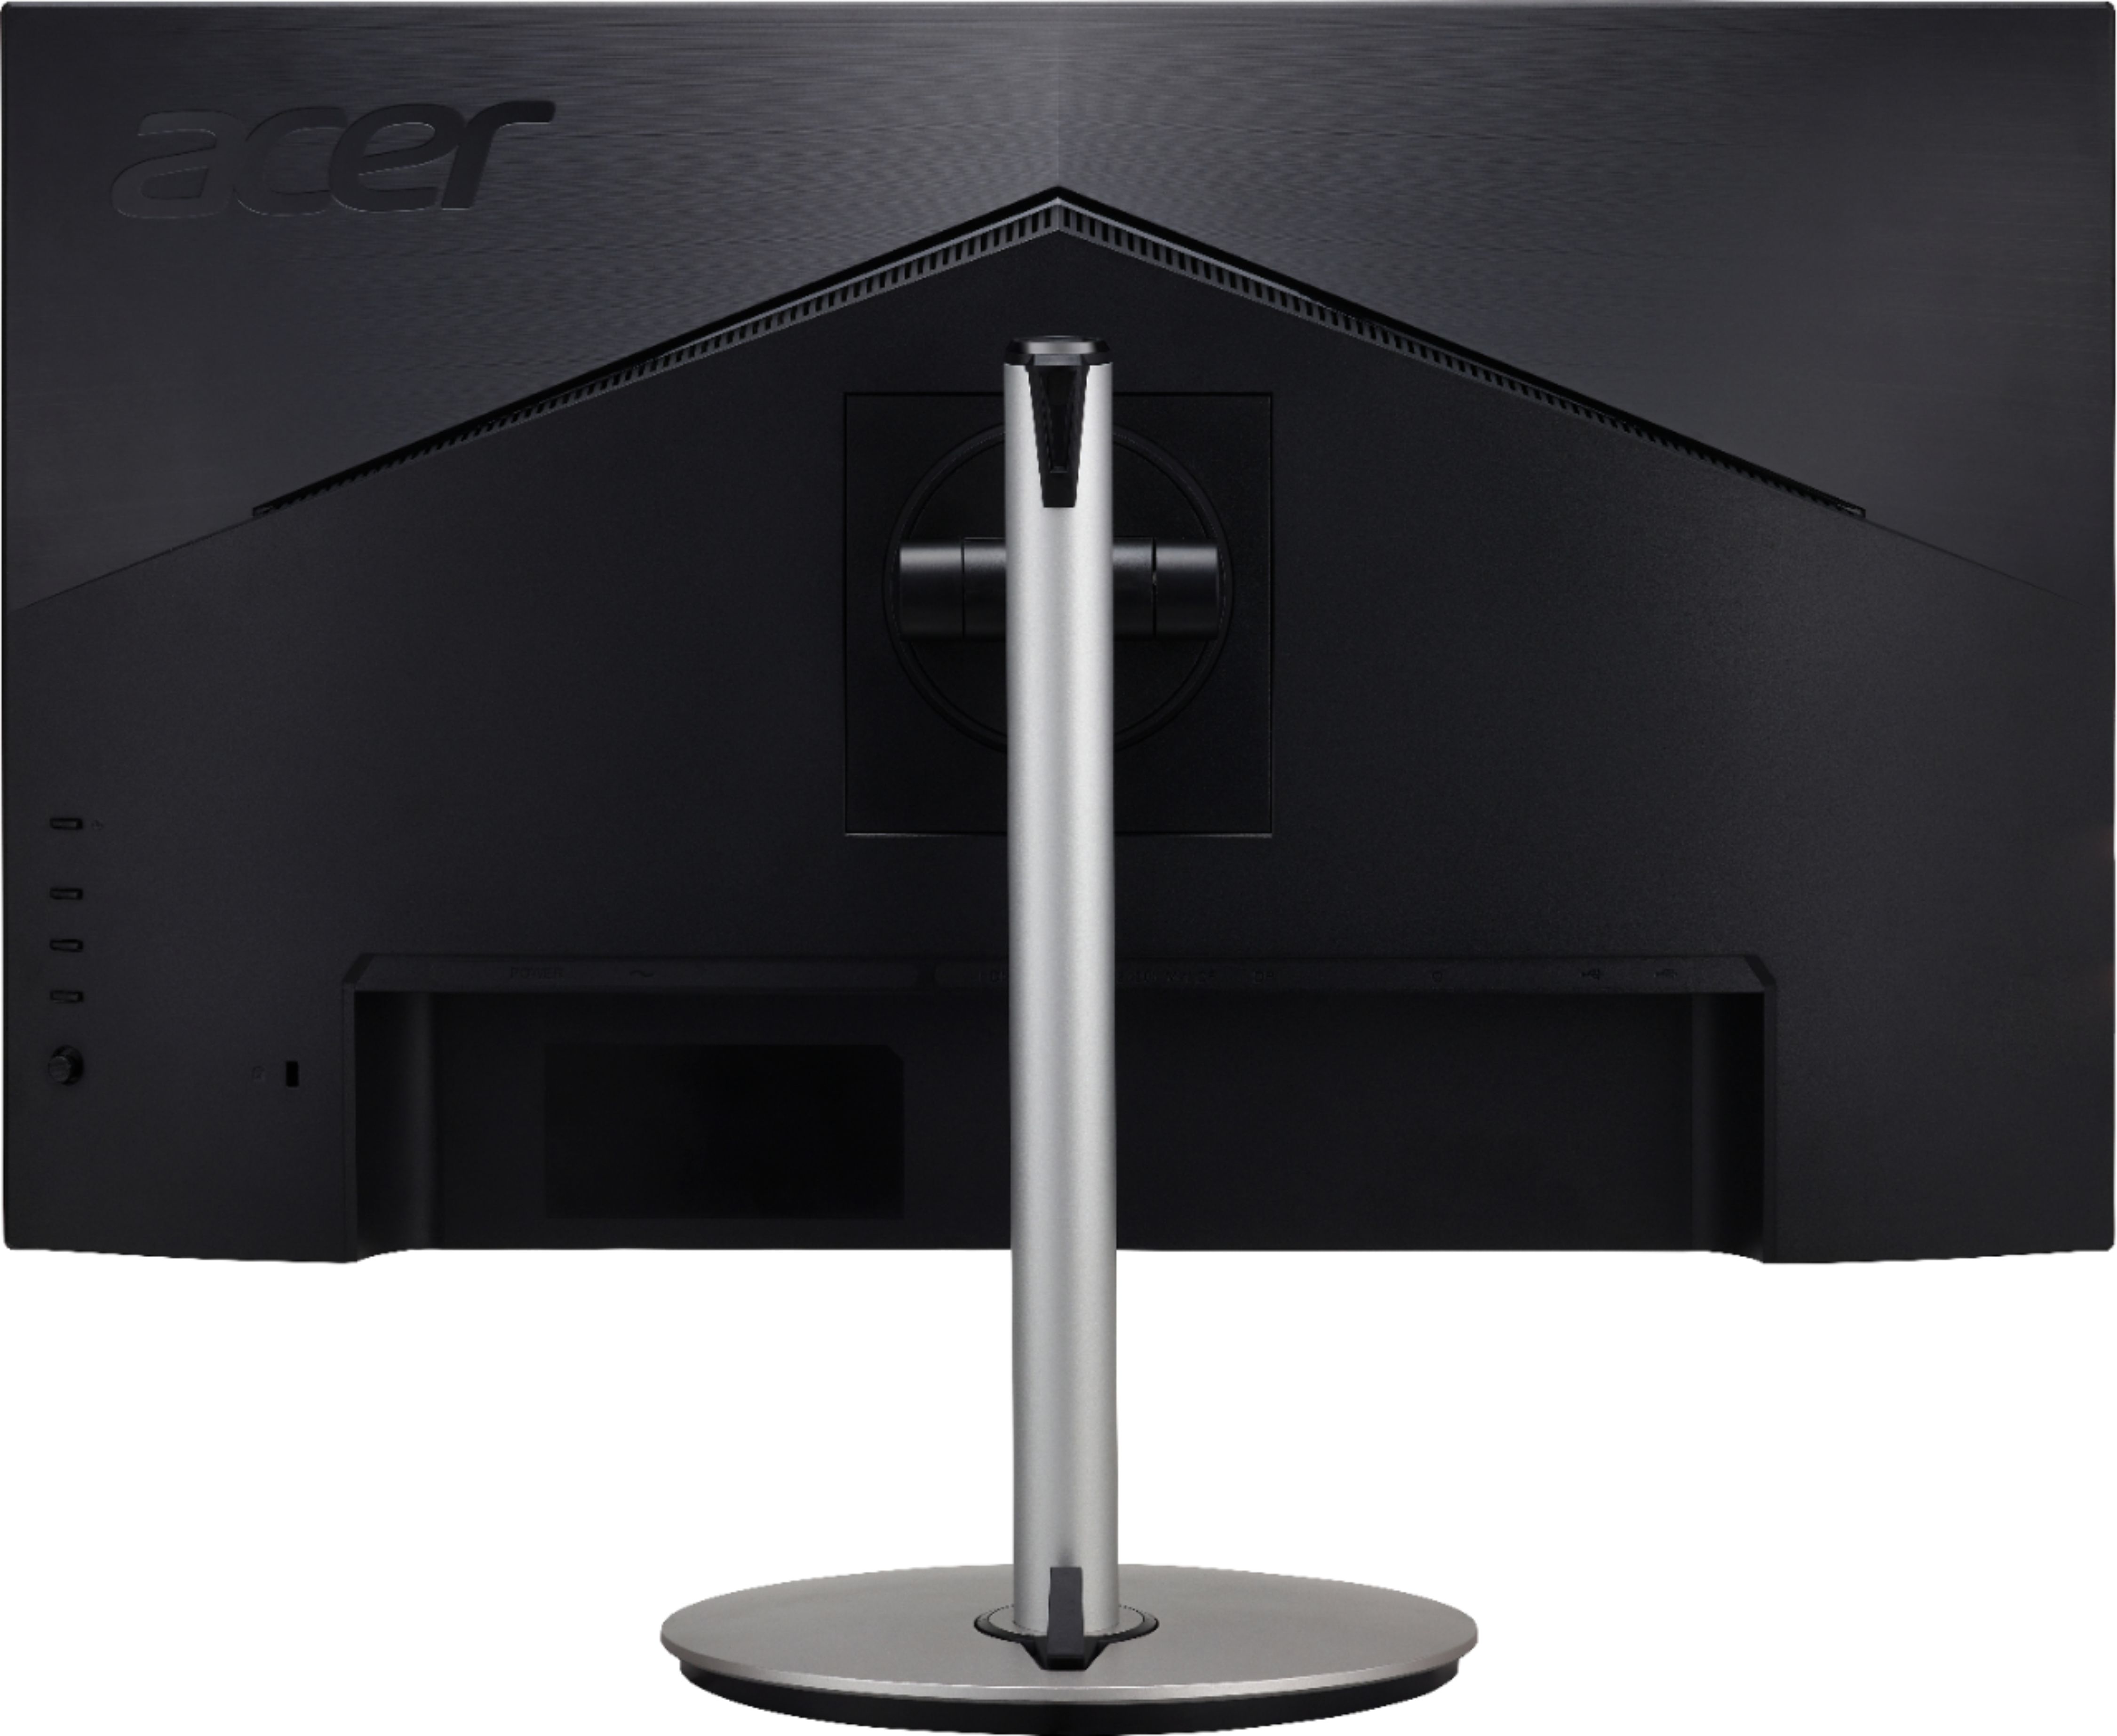 Back View: Acer - Predator Gaming PMP710 NPMSP11004 Mouse Pad - Black